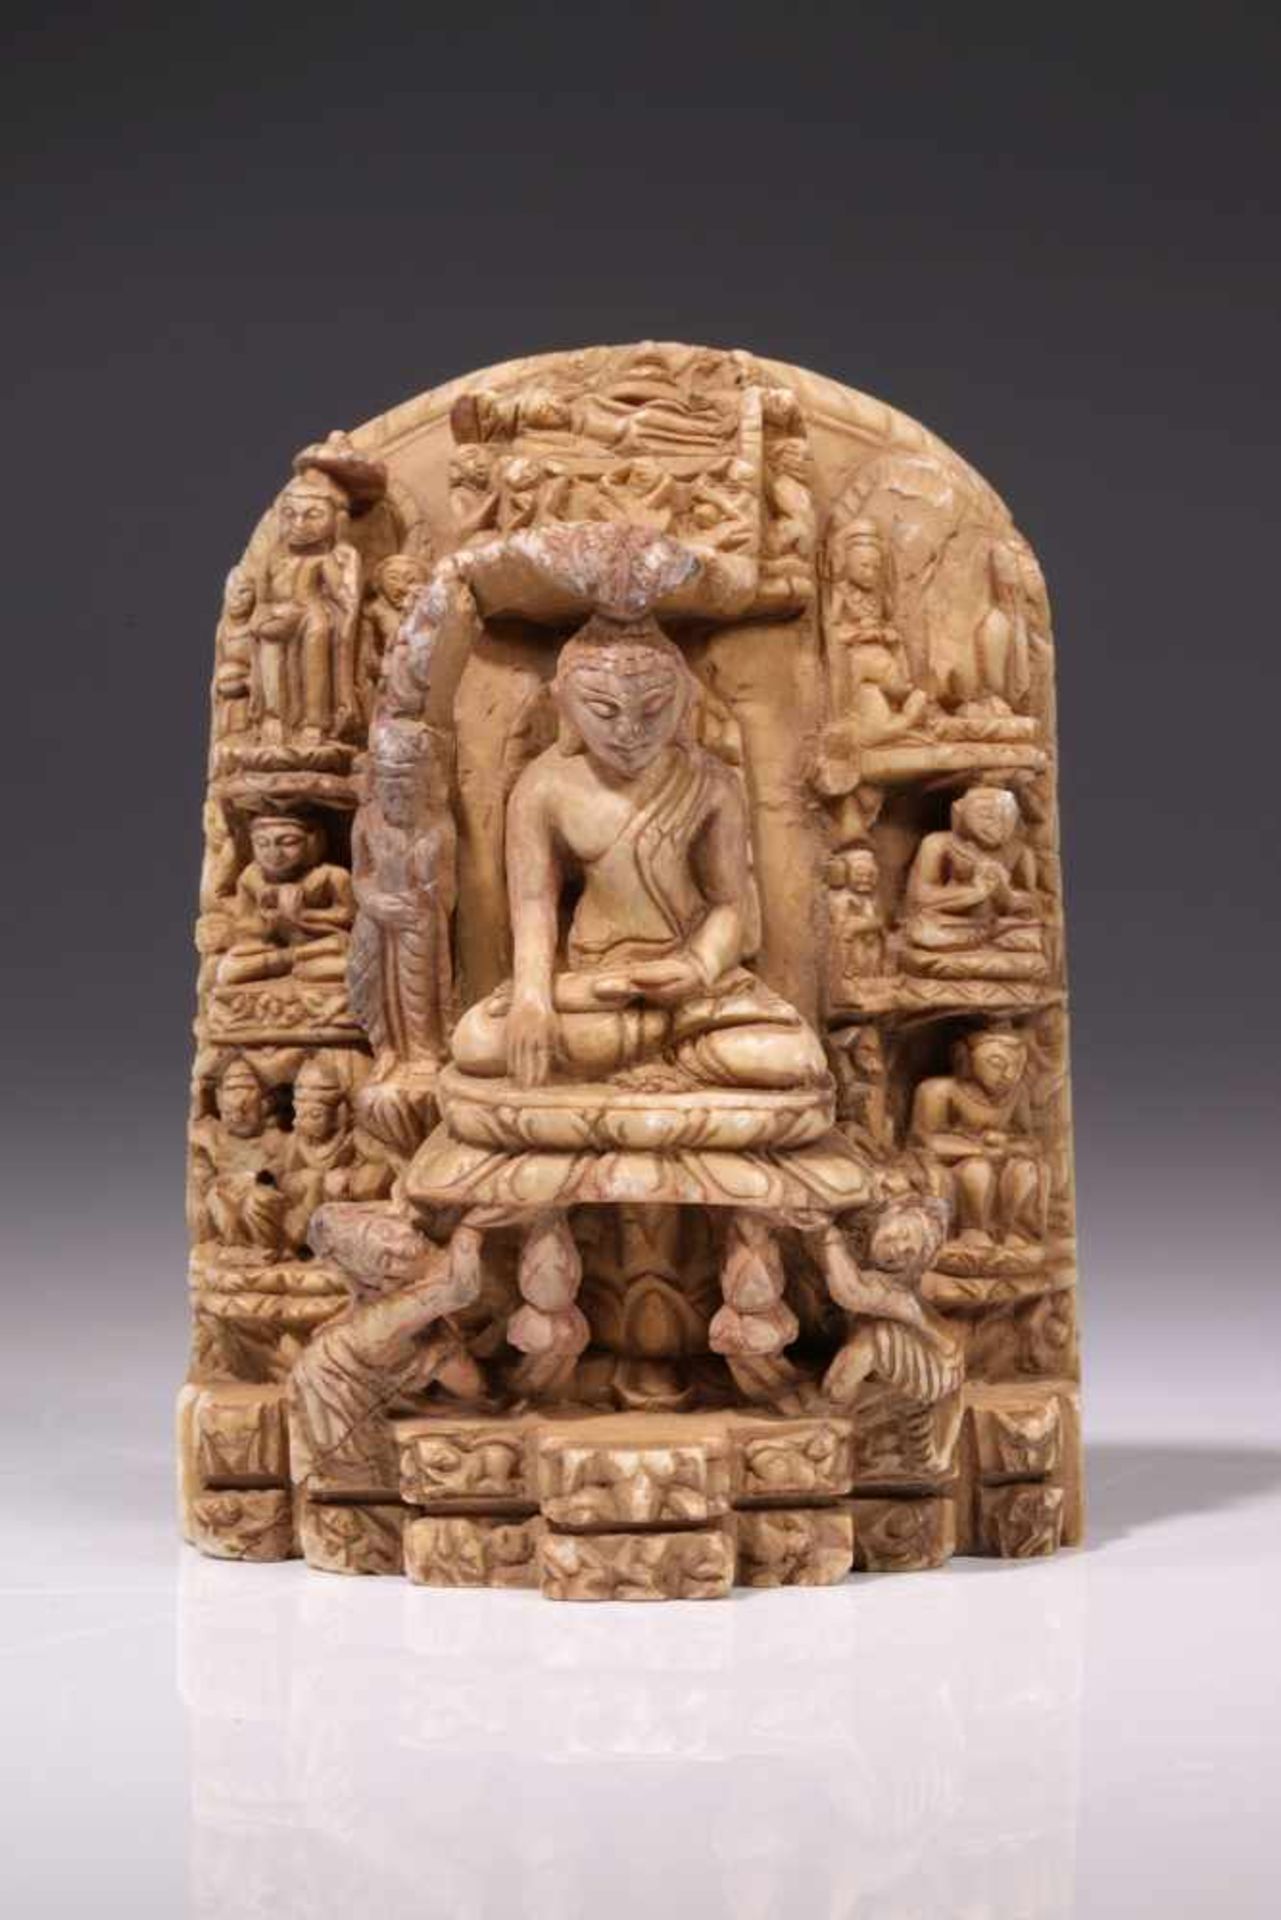 IMPORTANT BUDDHA PAGAN STEELEsoapstone,Birma , 12th century,Size: 8 cmBuddha is sitting in